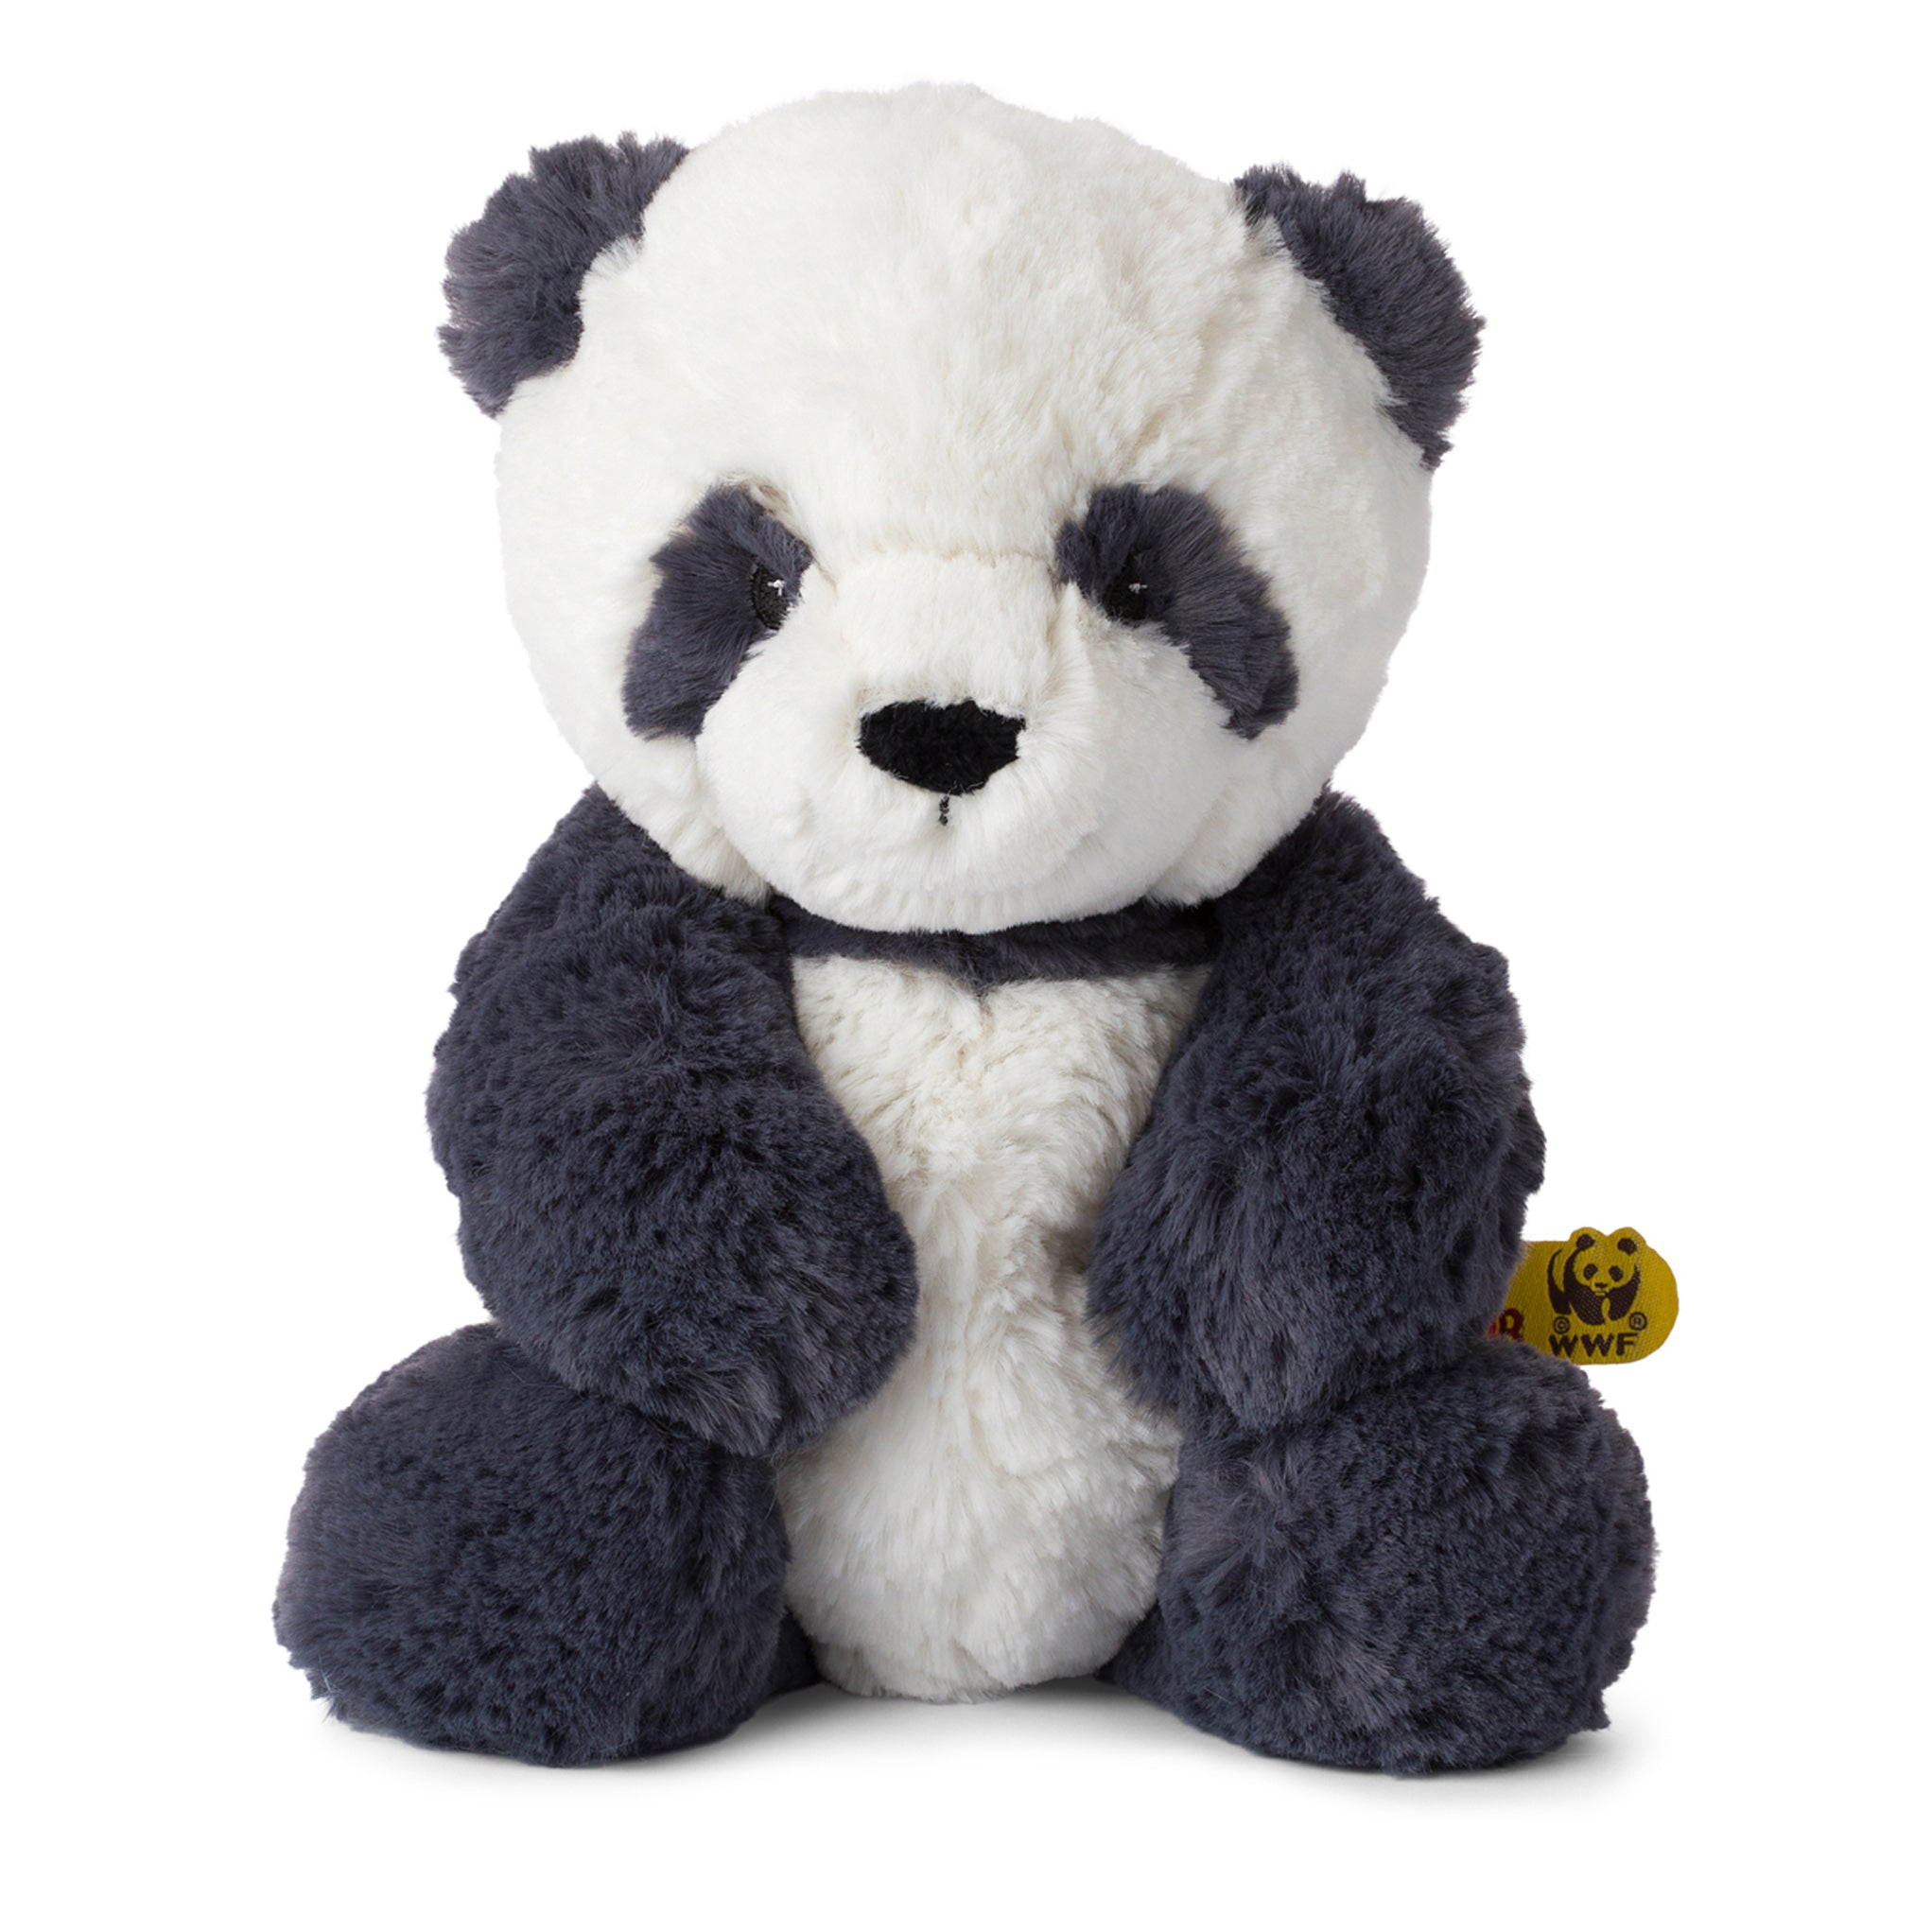 Adopt a Panda  Symbolic Adoptions from WWF